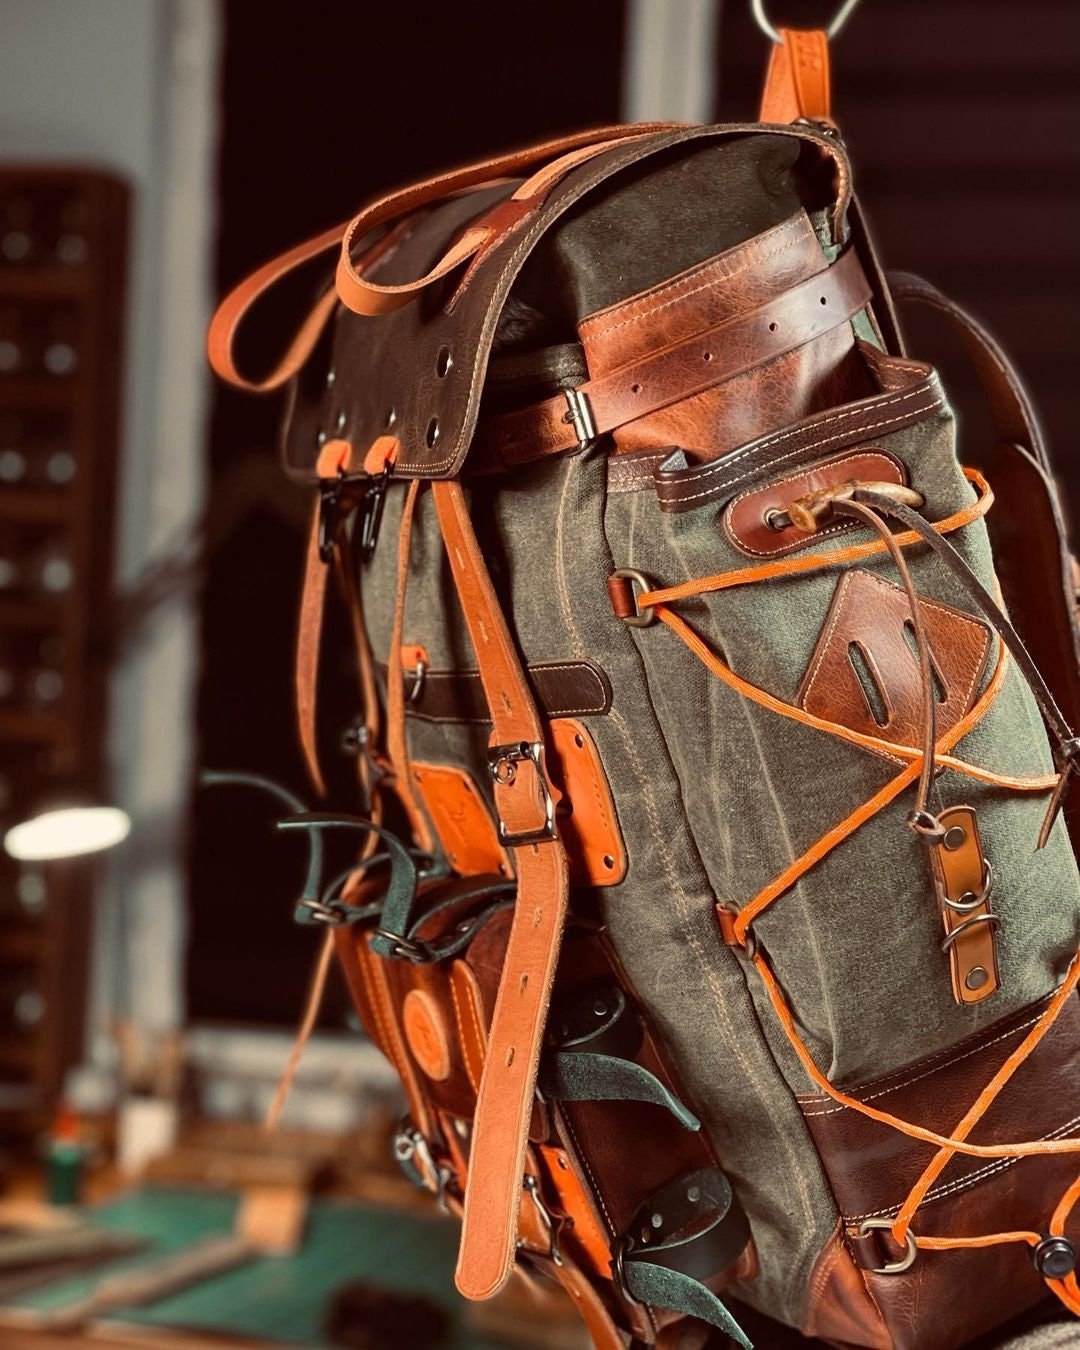 Custom order for Malulik Green Backpack Babylon | Bushcraft Design Awards | Handmade Leather and Waxed Backpack for Travel, Camping,Military | 45 Liter | Personalization bushcraft - camping - hiking backpack 99percenthandmade   